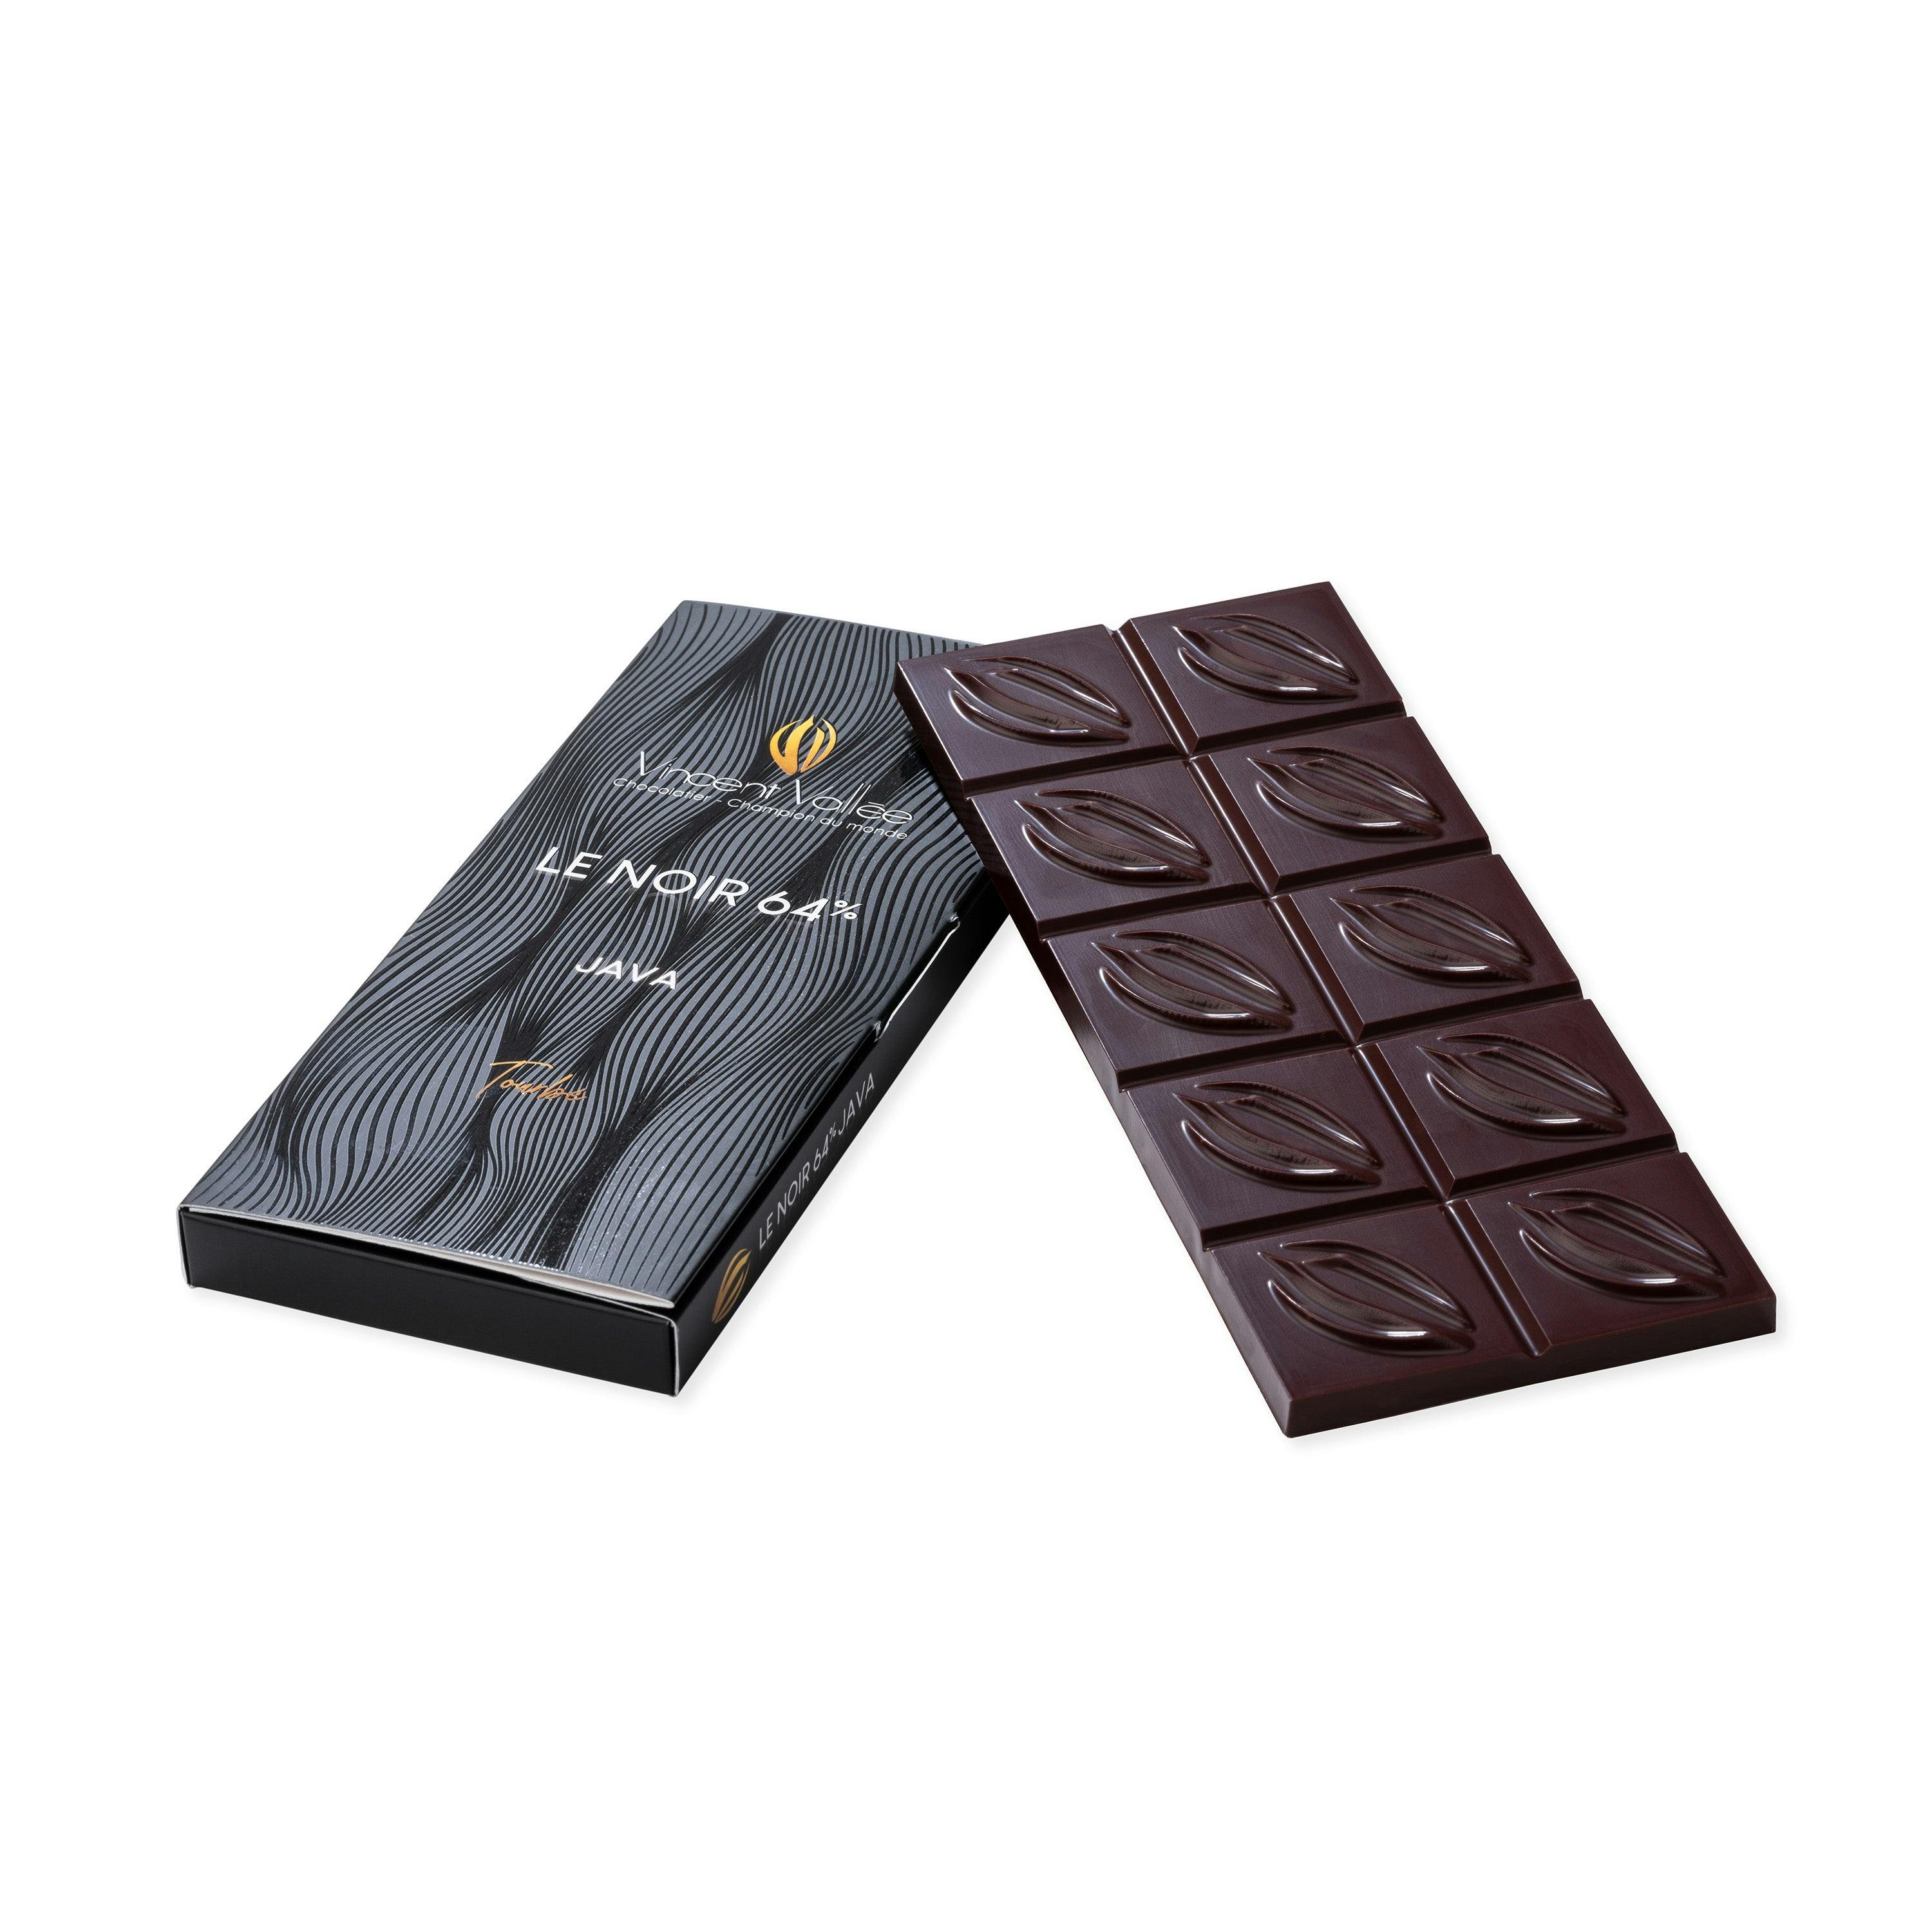 Java 64% - Vincent Vallée chocolatier champion du monde